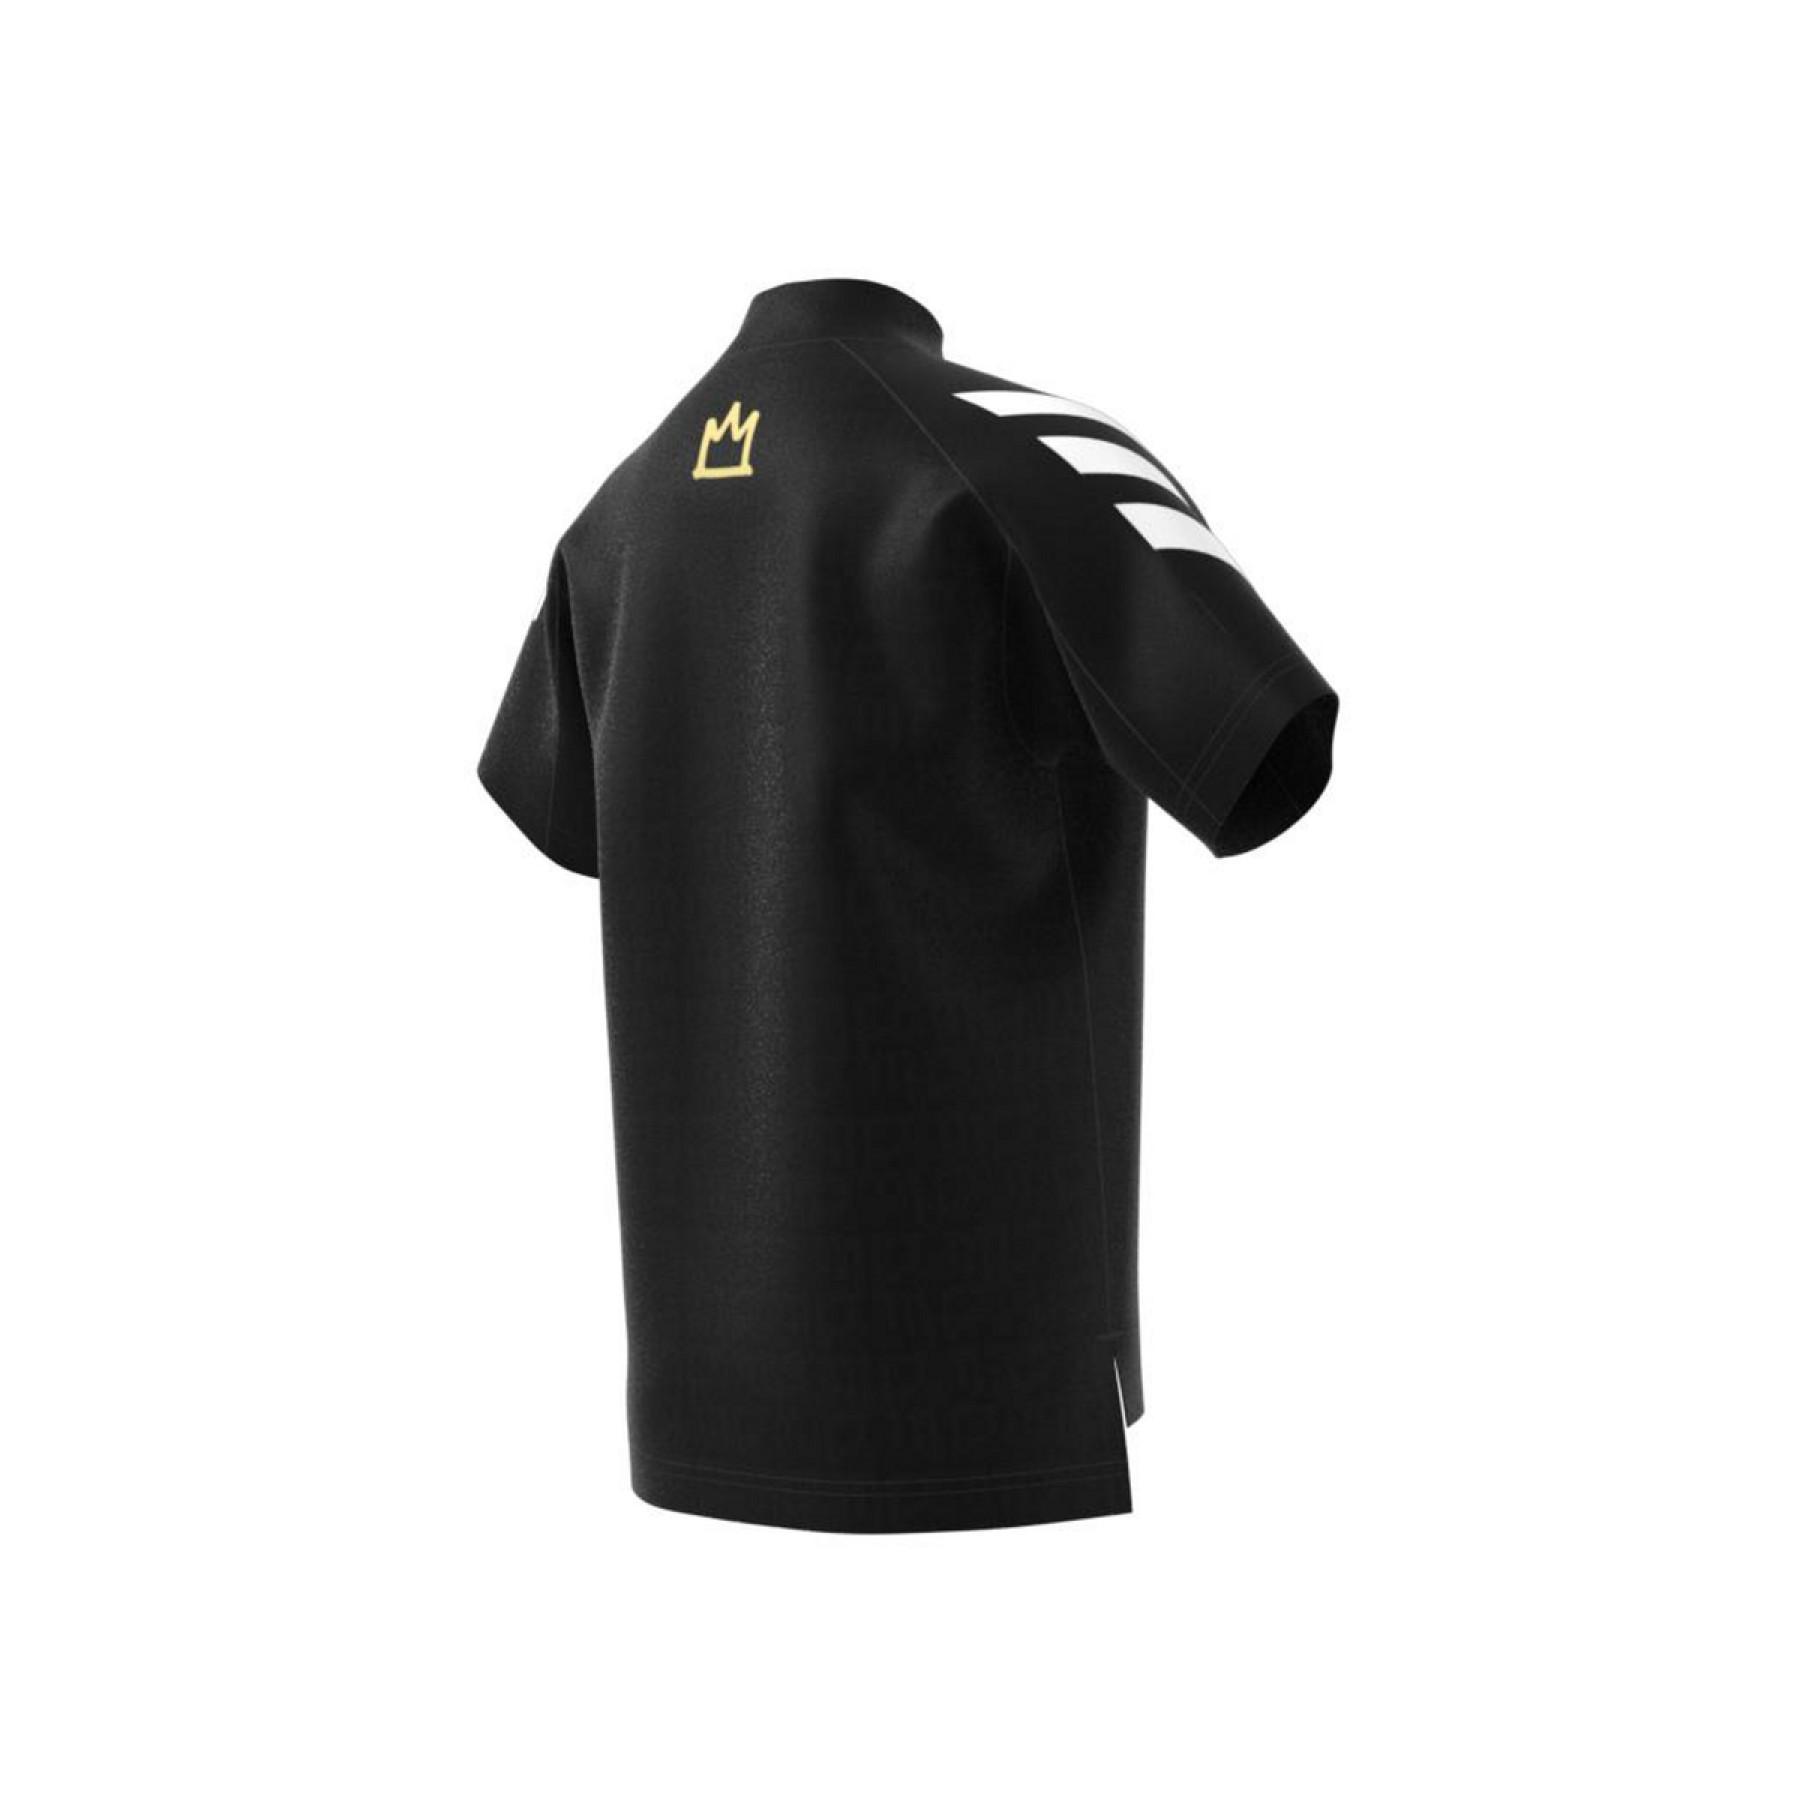 Koszulka dziecięca adidas Salah Football-Inspired